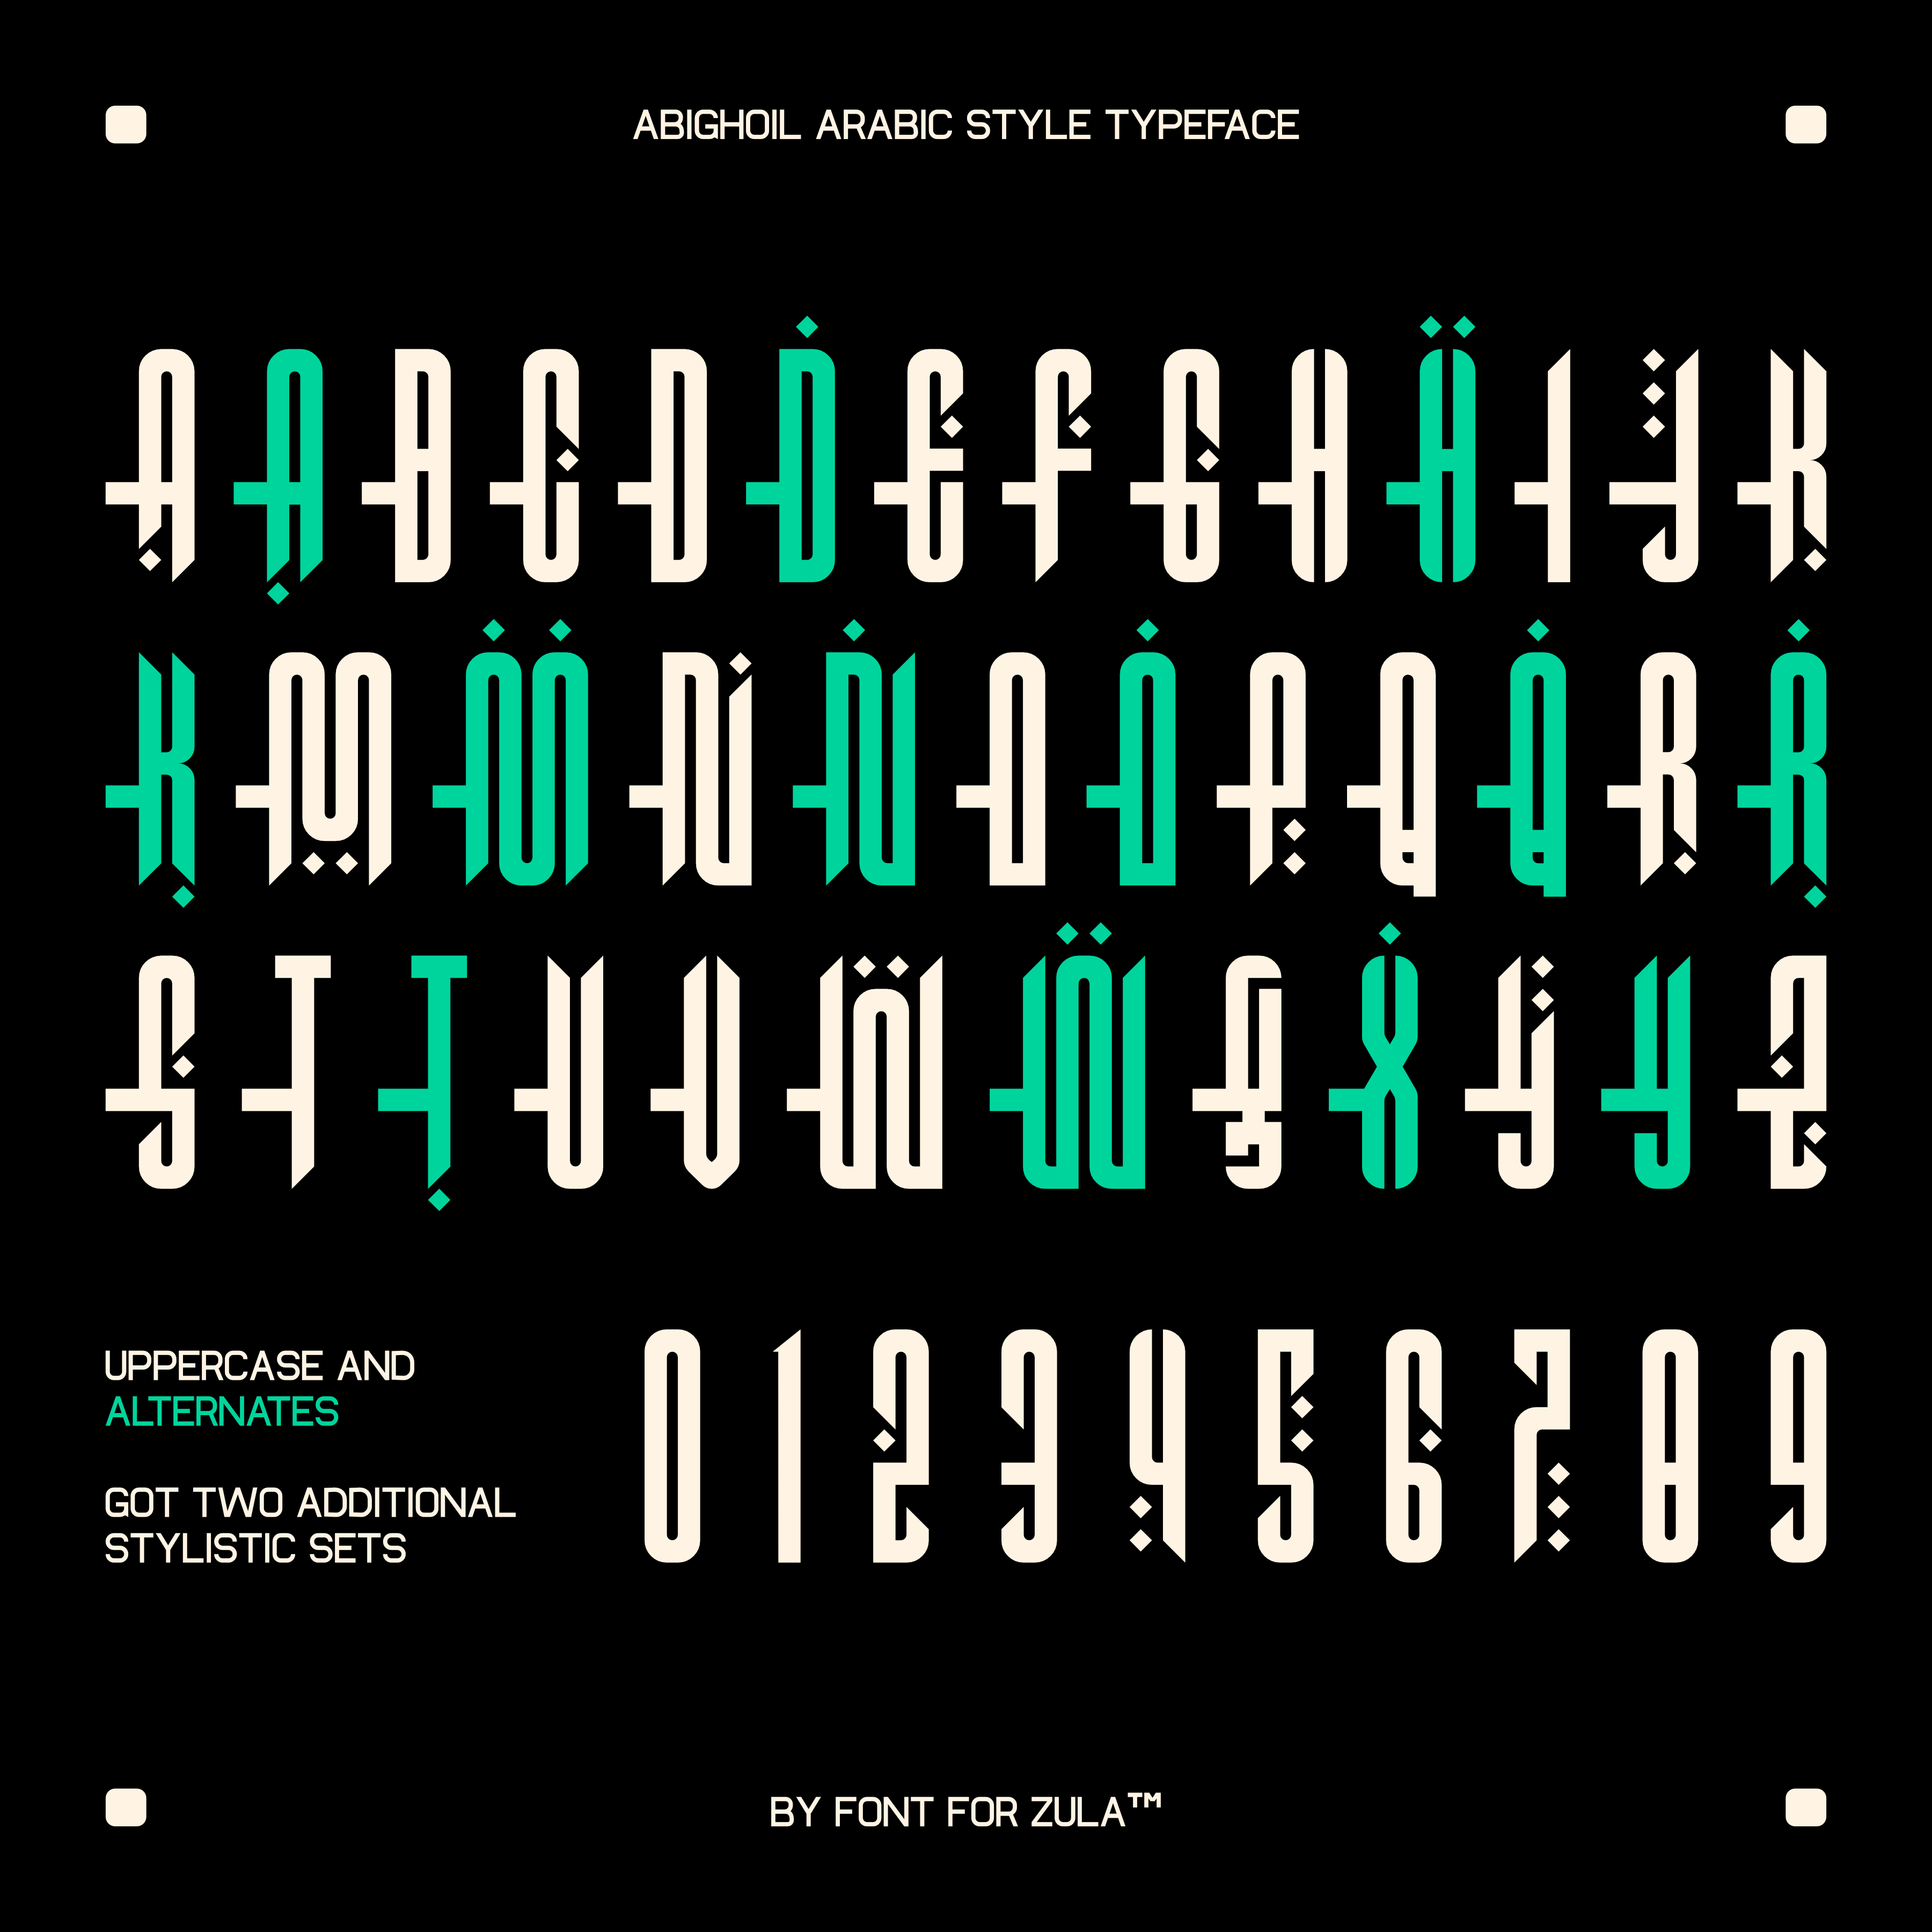 ABIGHOIL Typeface